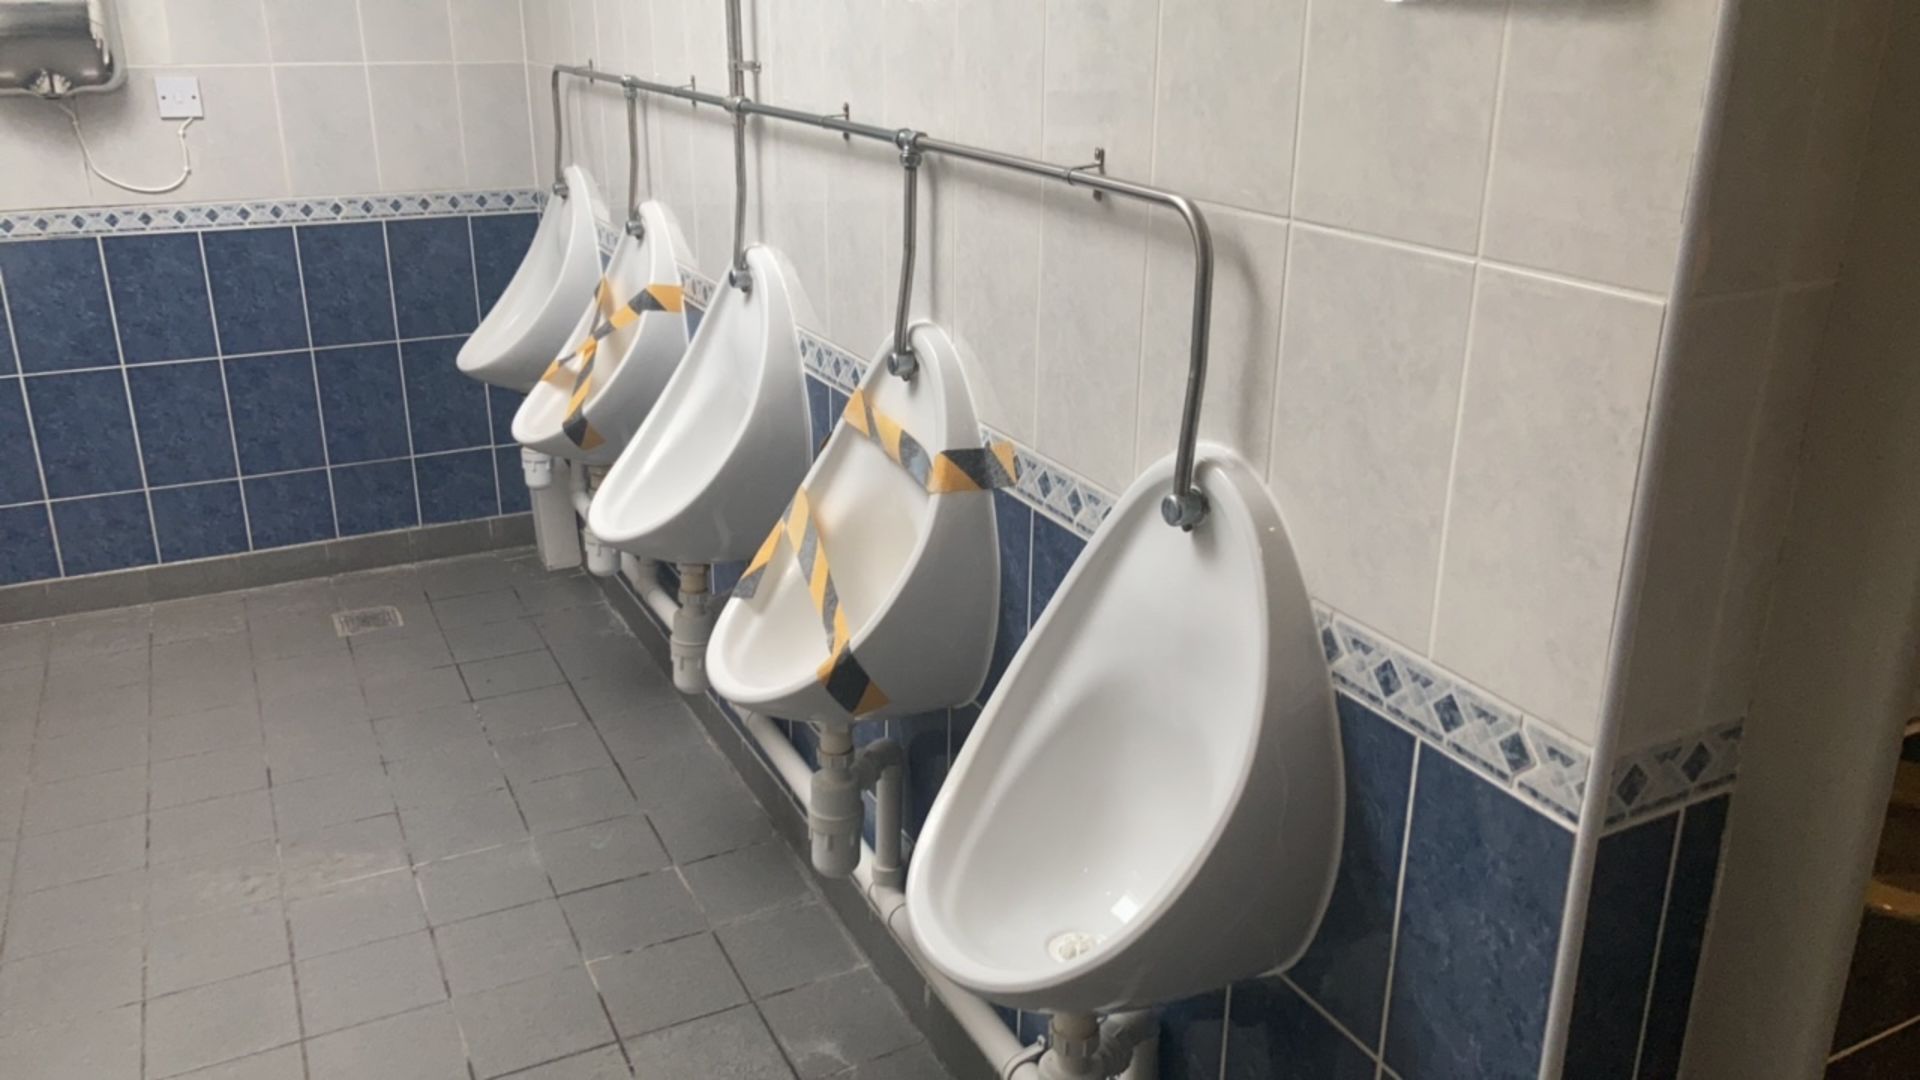 Gents toilet - Image 3 of 5